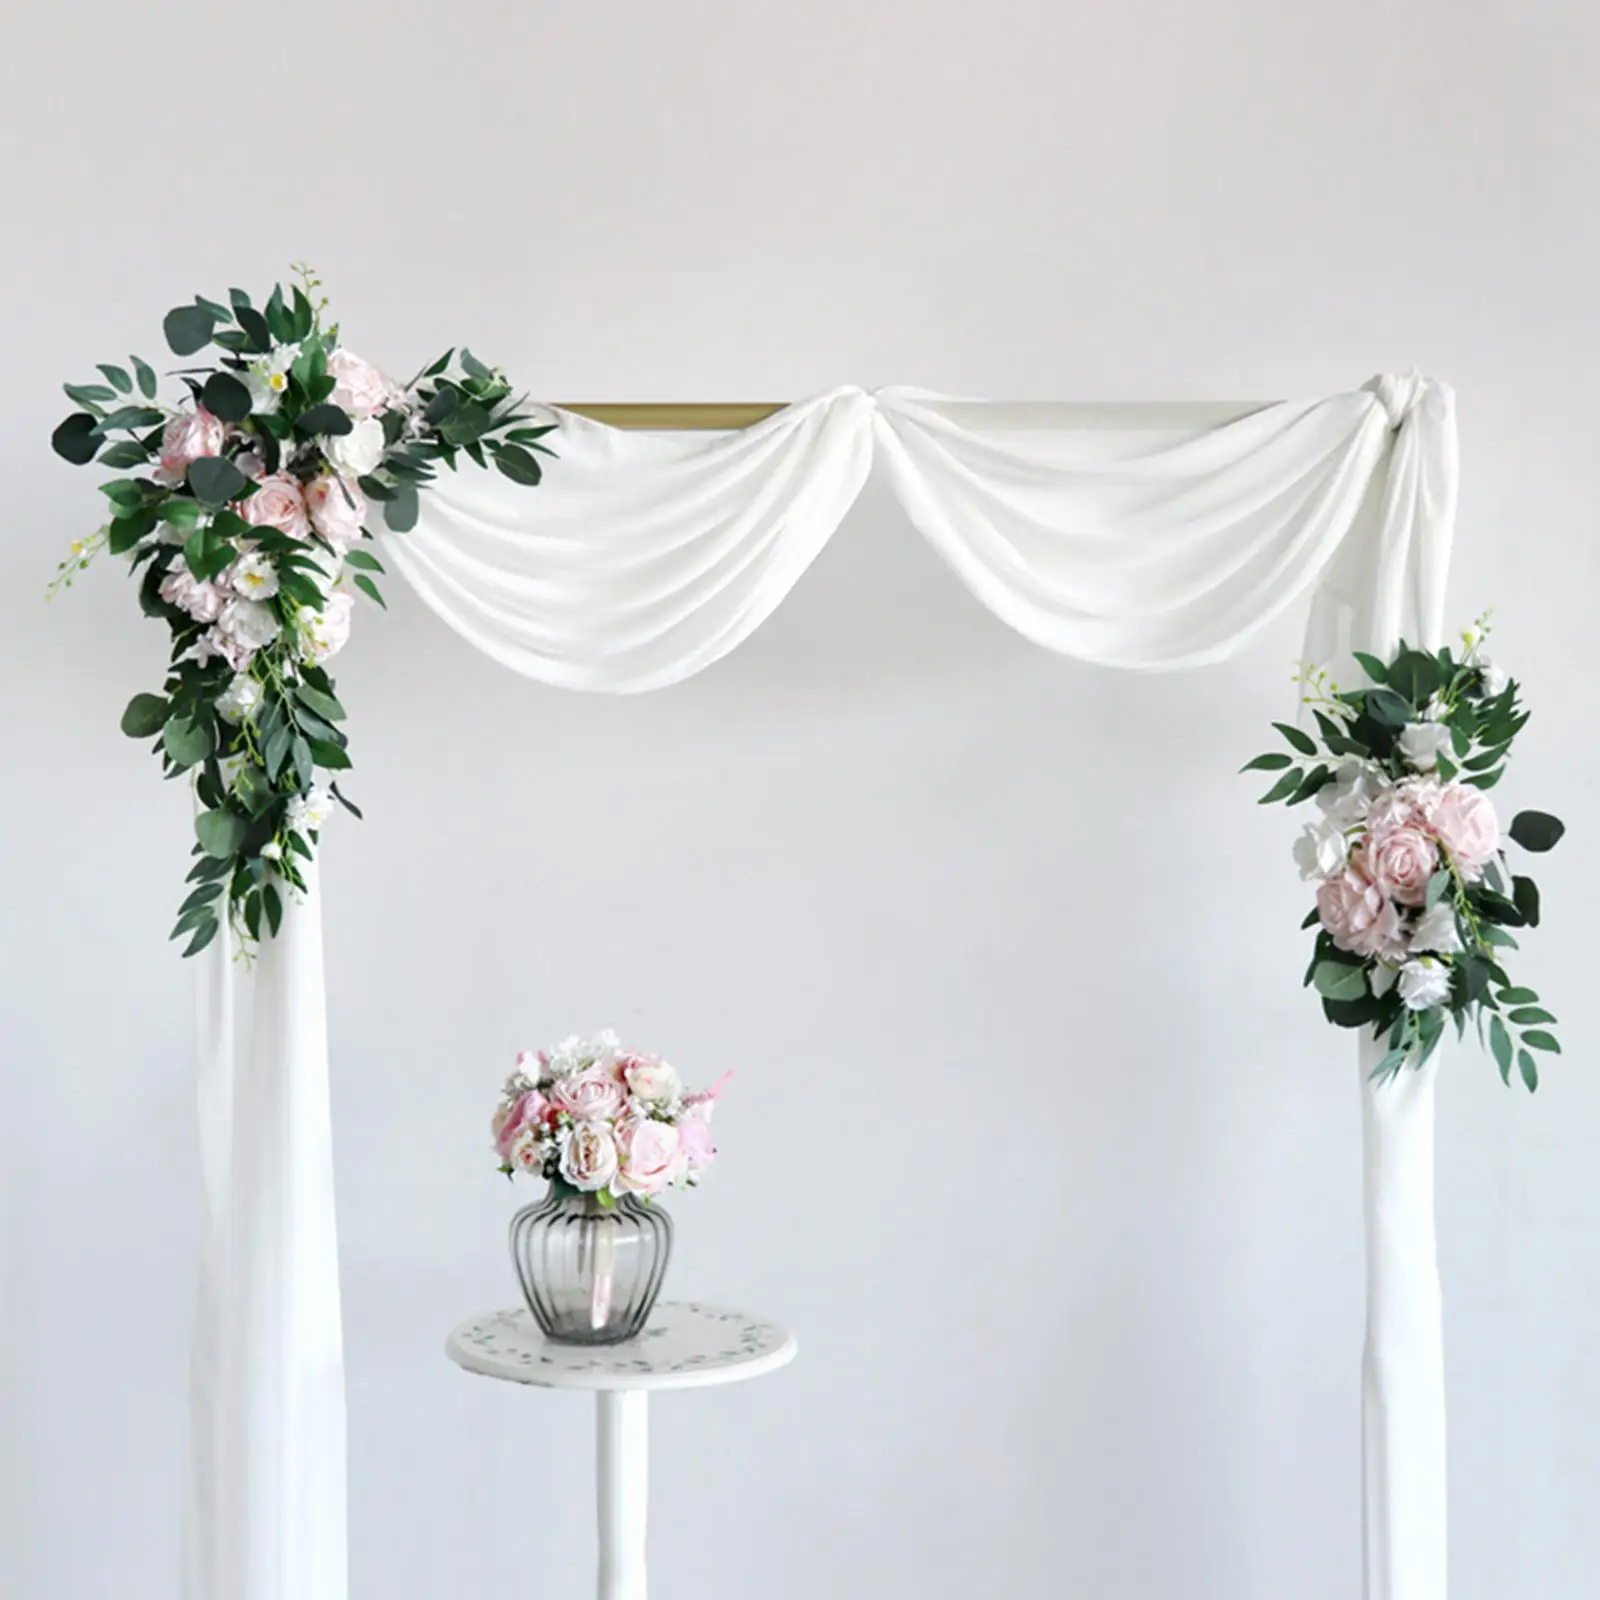 2x Artificial Wedding Arch Flowers Party Wedding Decoration Window Backdrop